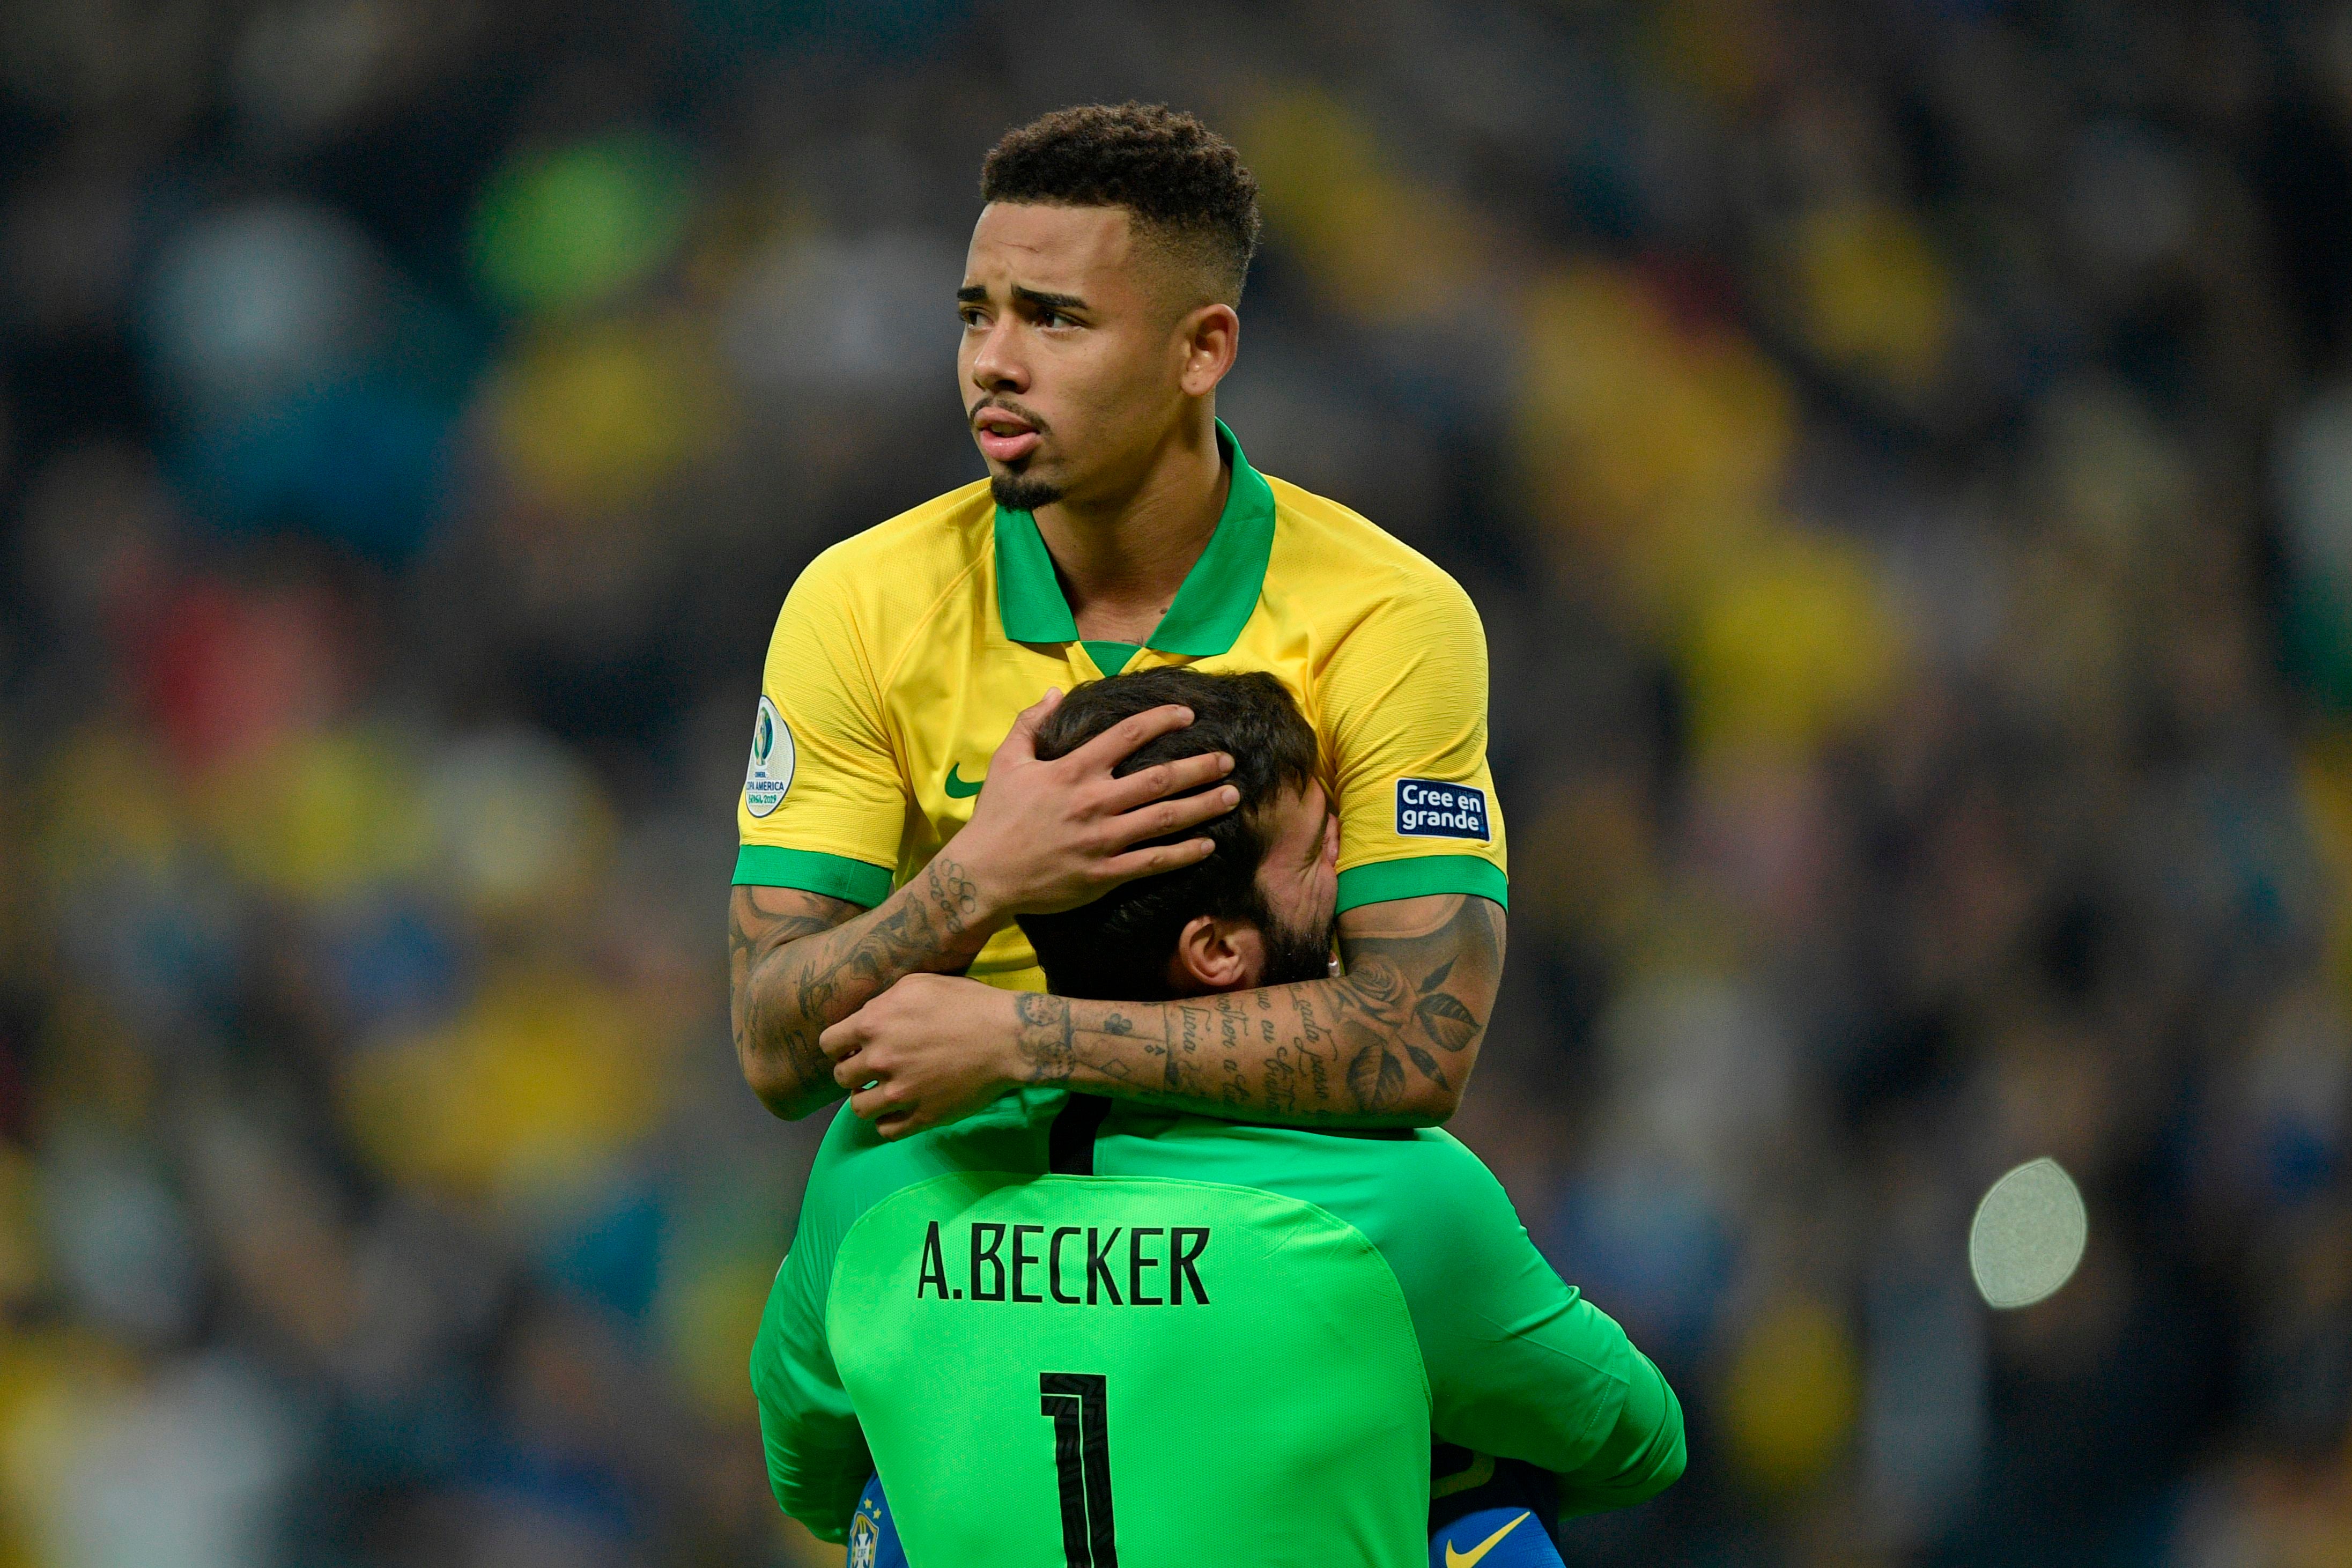 Liverpool’s Brazilians will not going on international duty